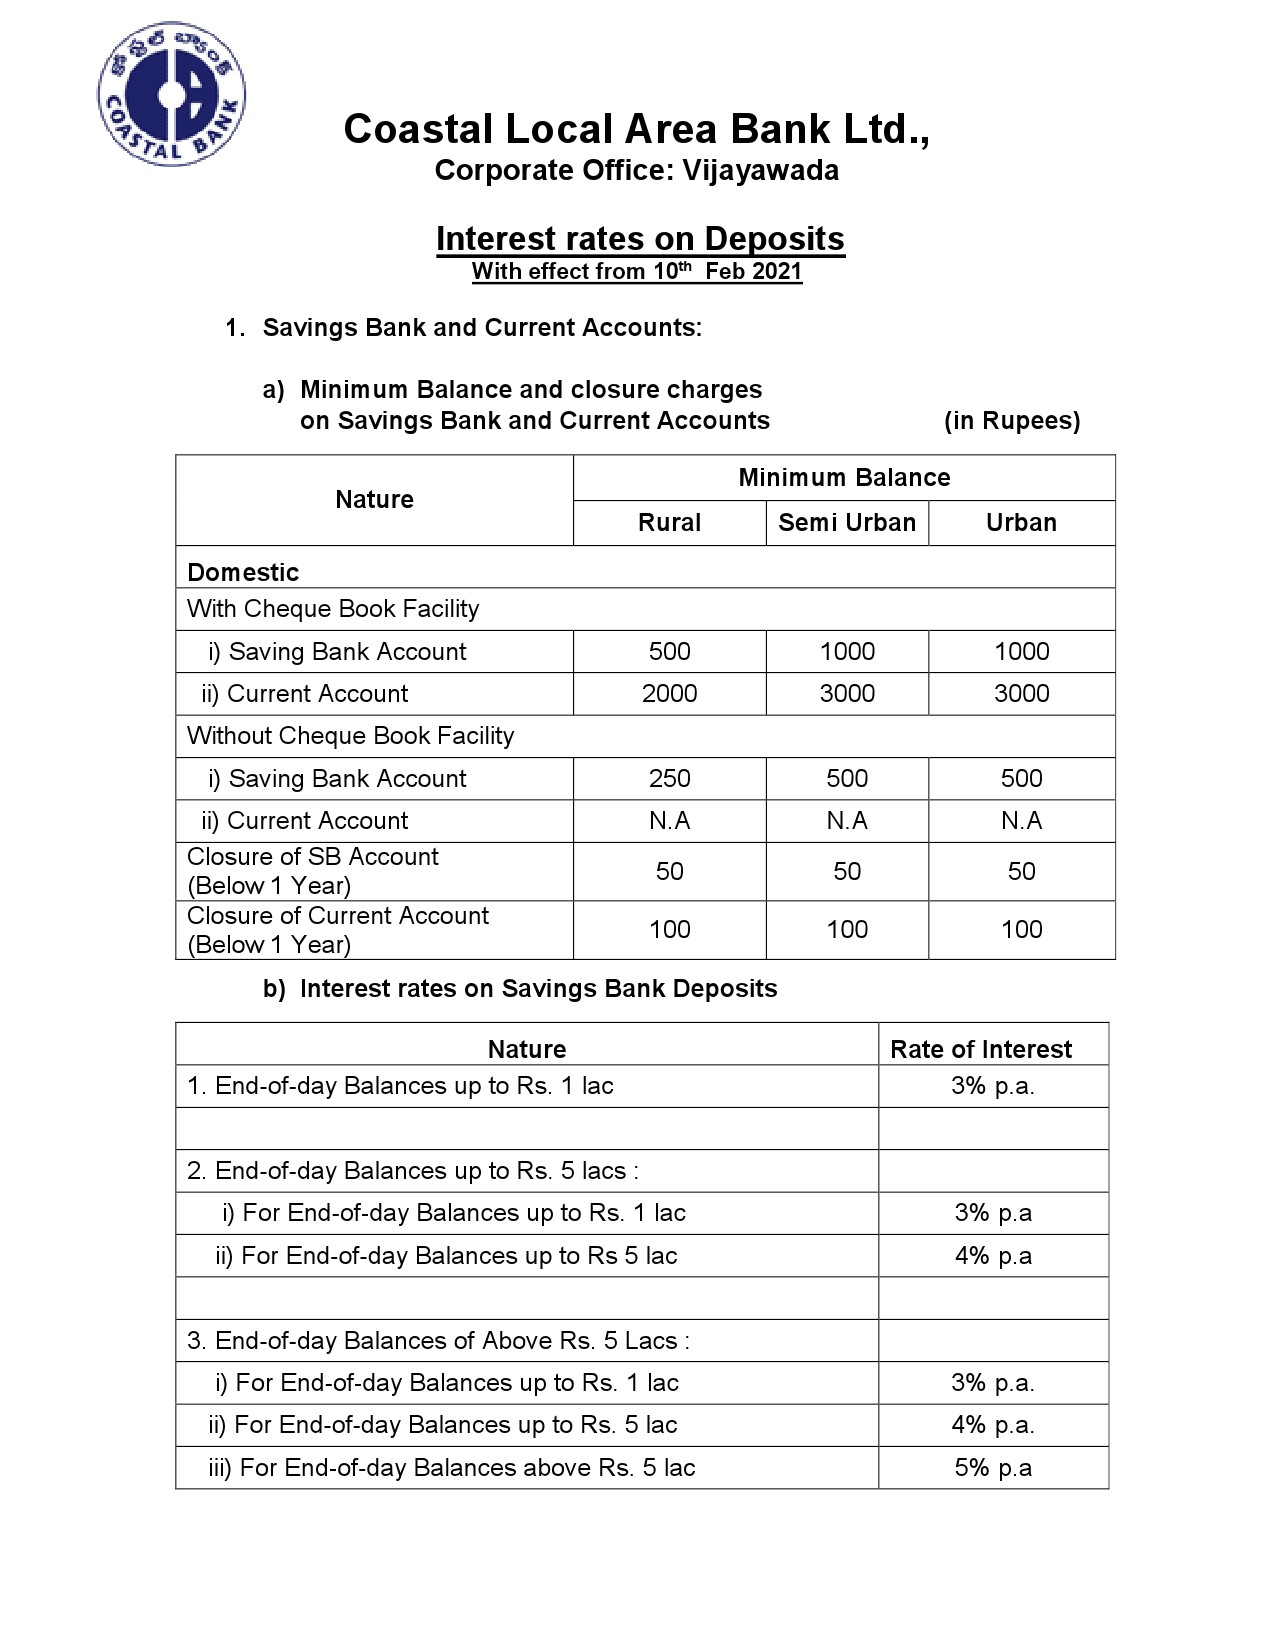 Fixed Deposit Interest Rates of Coastal Local Area Bank Ltd - Image 1